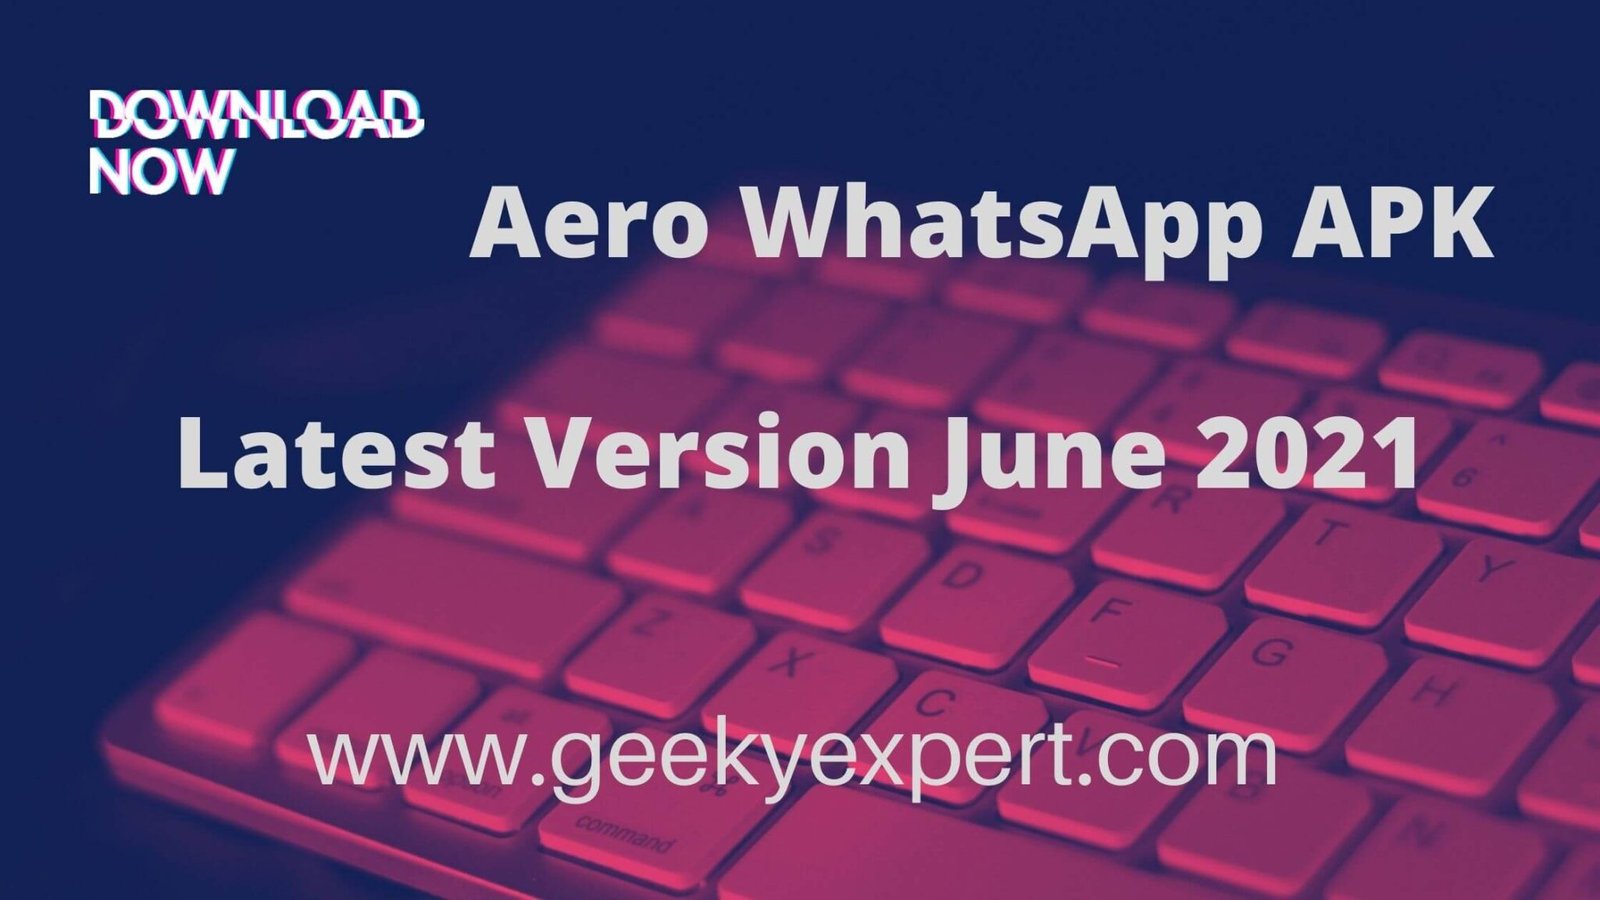 aero whatsapp apk download latest version 2019